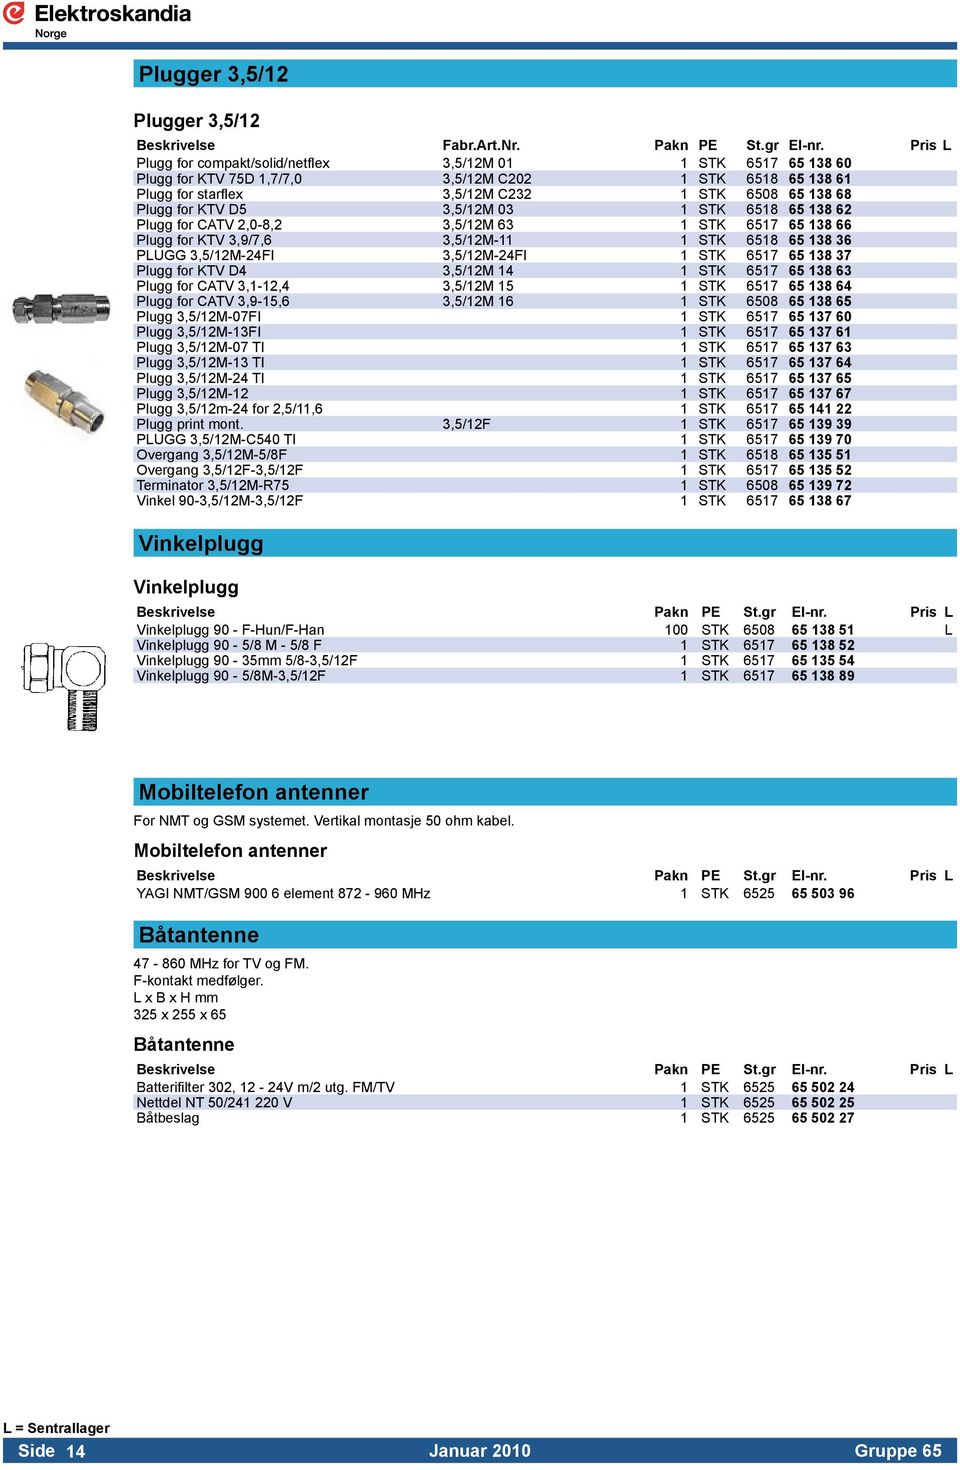 STK 6517 65 138 37 Plugg for KTV D4 3,5/12M 14 1 STK 6517 65 138 63 Plugg for CATV 3,1-12,4 3,5/12M 15 1 STK 6517 65 138 64 Plugg for CATV 3,9-15,6 3,5/12M 16 1 STK 6508 65 138 65 Plugg 3,5/12M-07FI